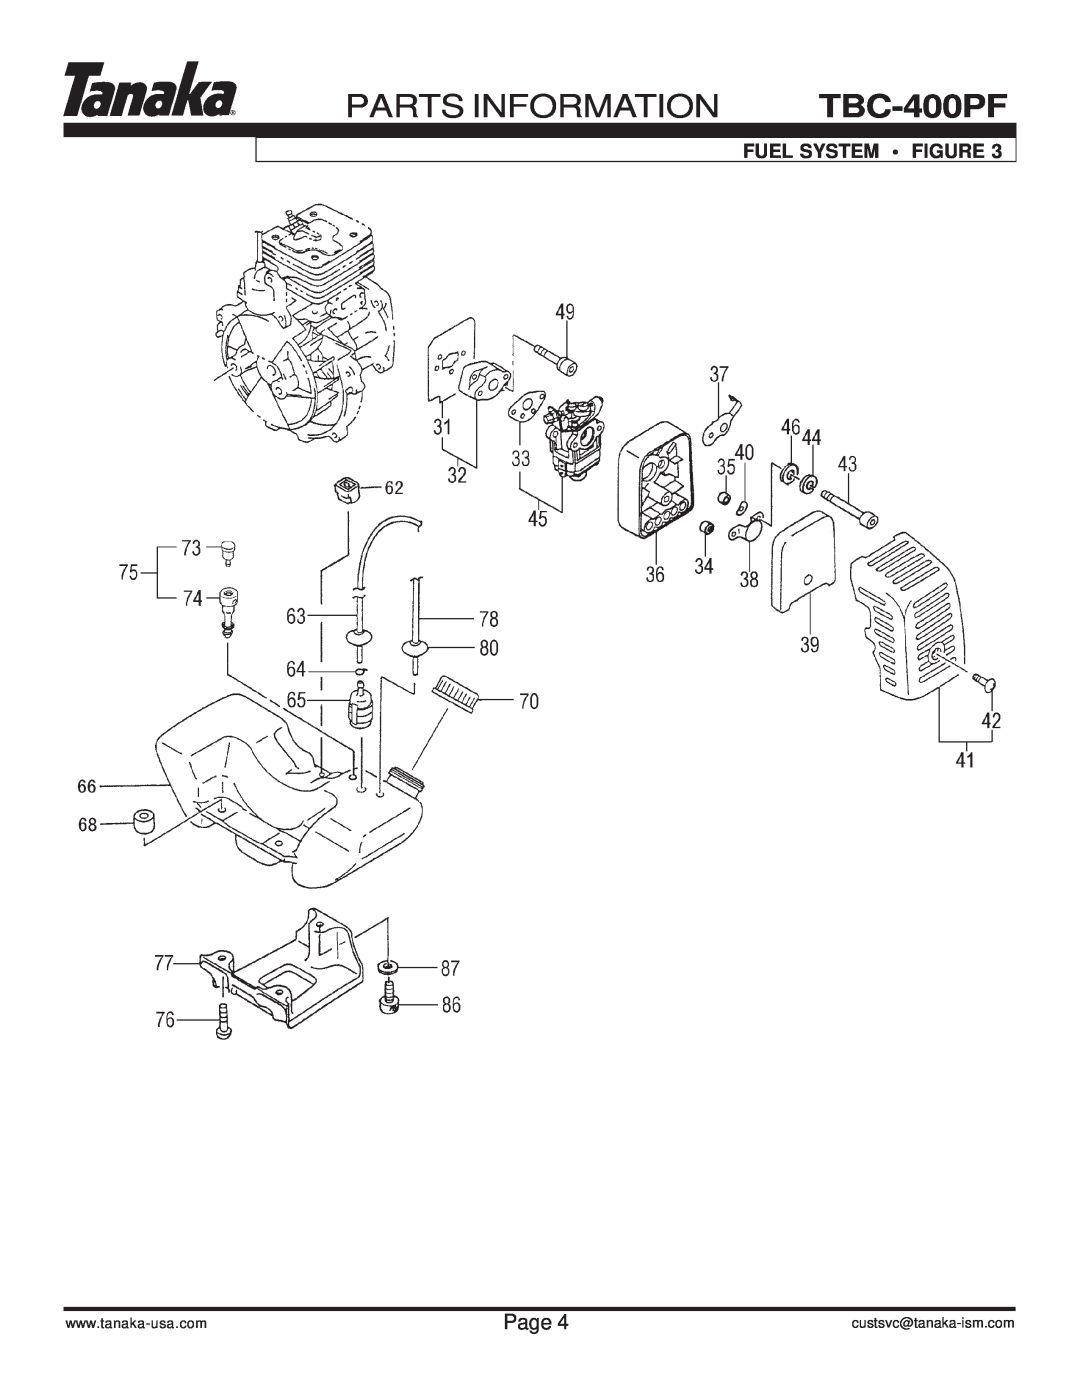 Tanaka TBC-400PF manual Parts Information, Fuel System Figure, Page, custsvc@tanaka-ism.com 